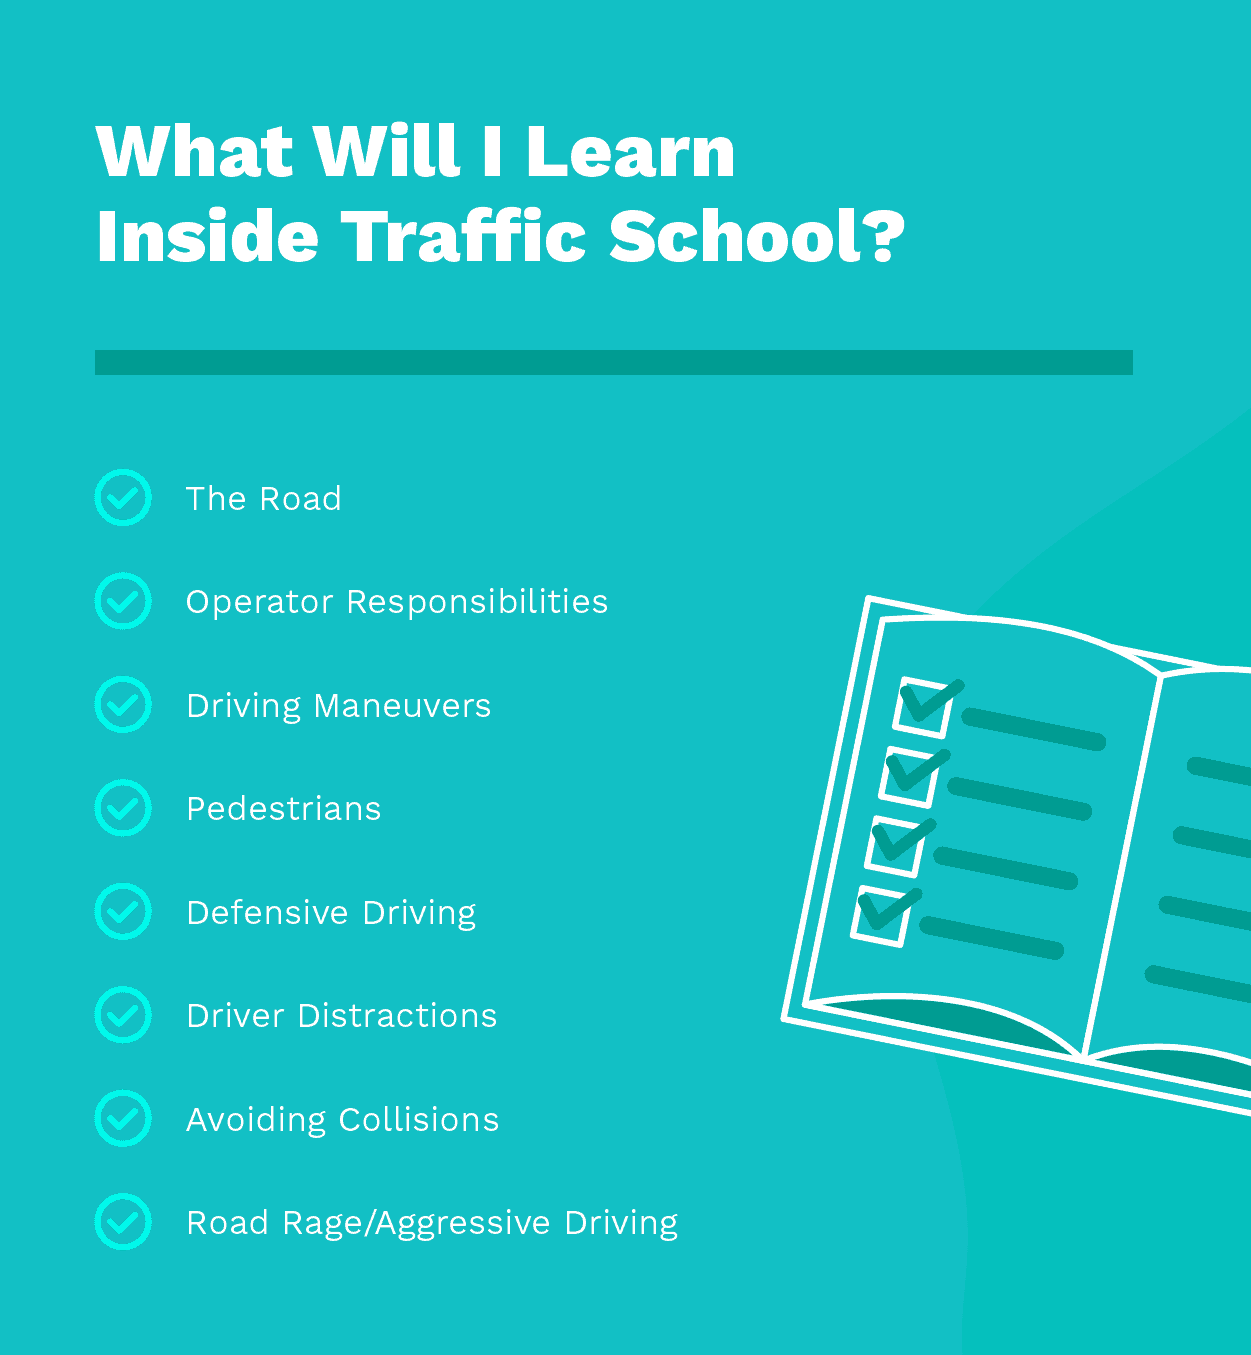 What Will I Learn Inside Traffic School?